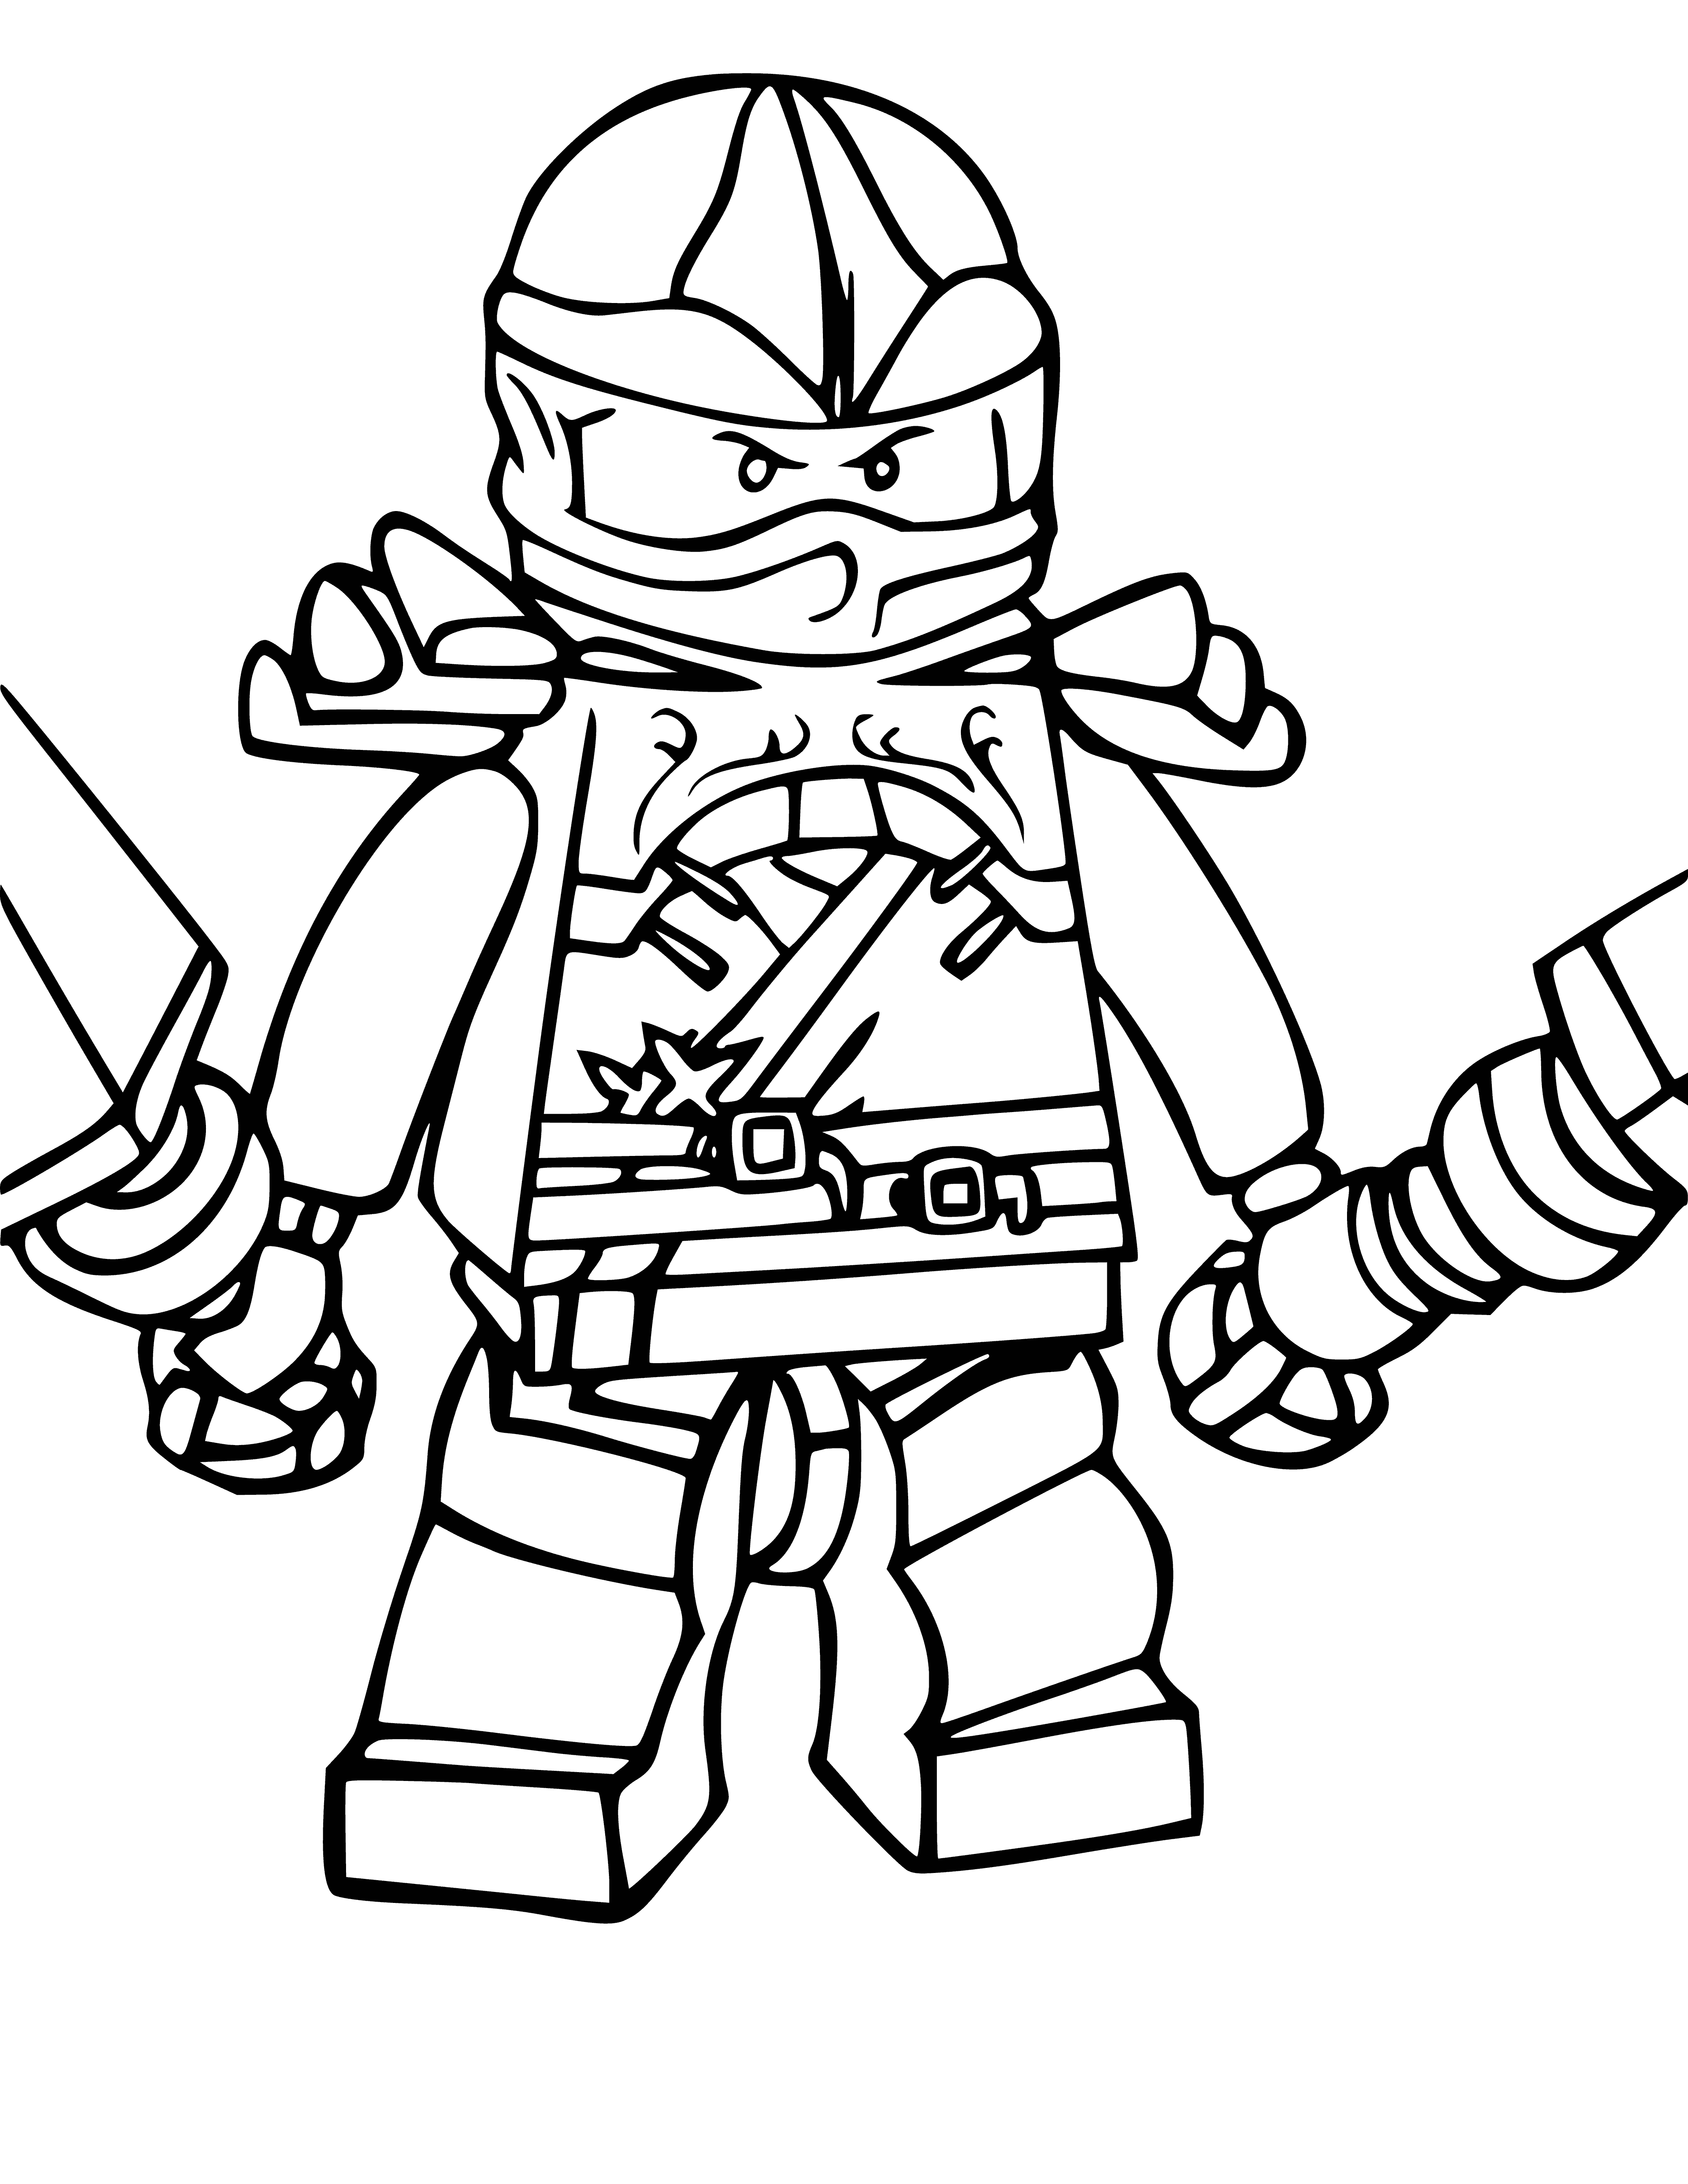 coloring page: Lego ninja figure: black, mask, sword, belt, leg armor, backpack, armguards, gloves. Ready for adventure!